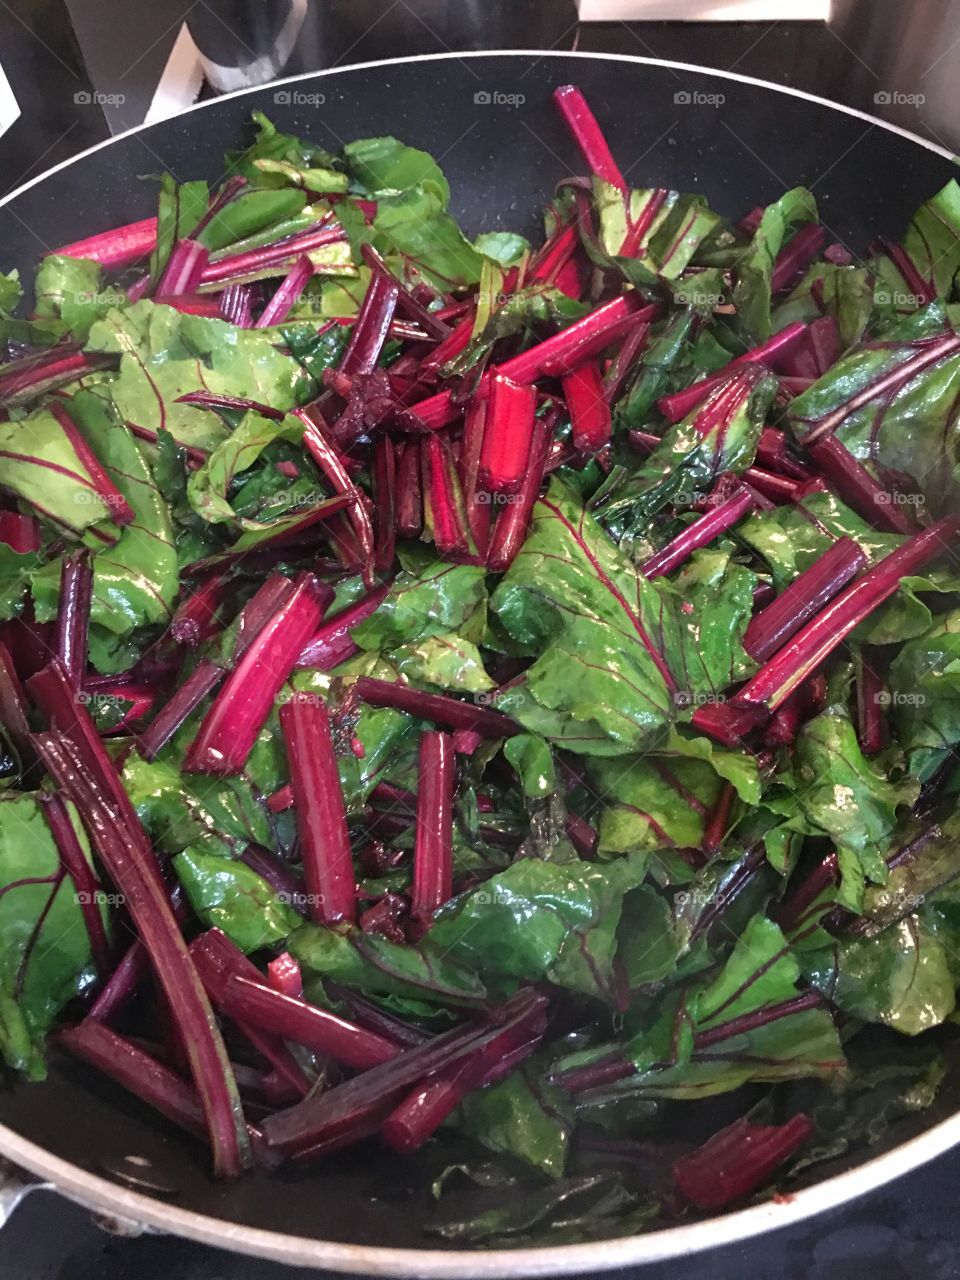 Closeup, beet root greens leaves background food image healthy eating